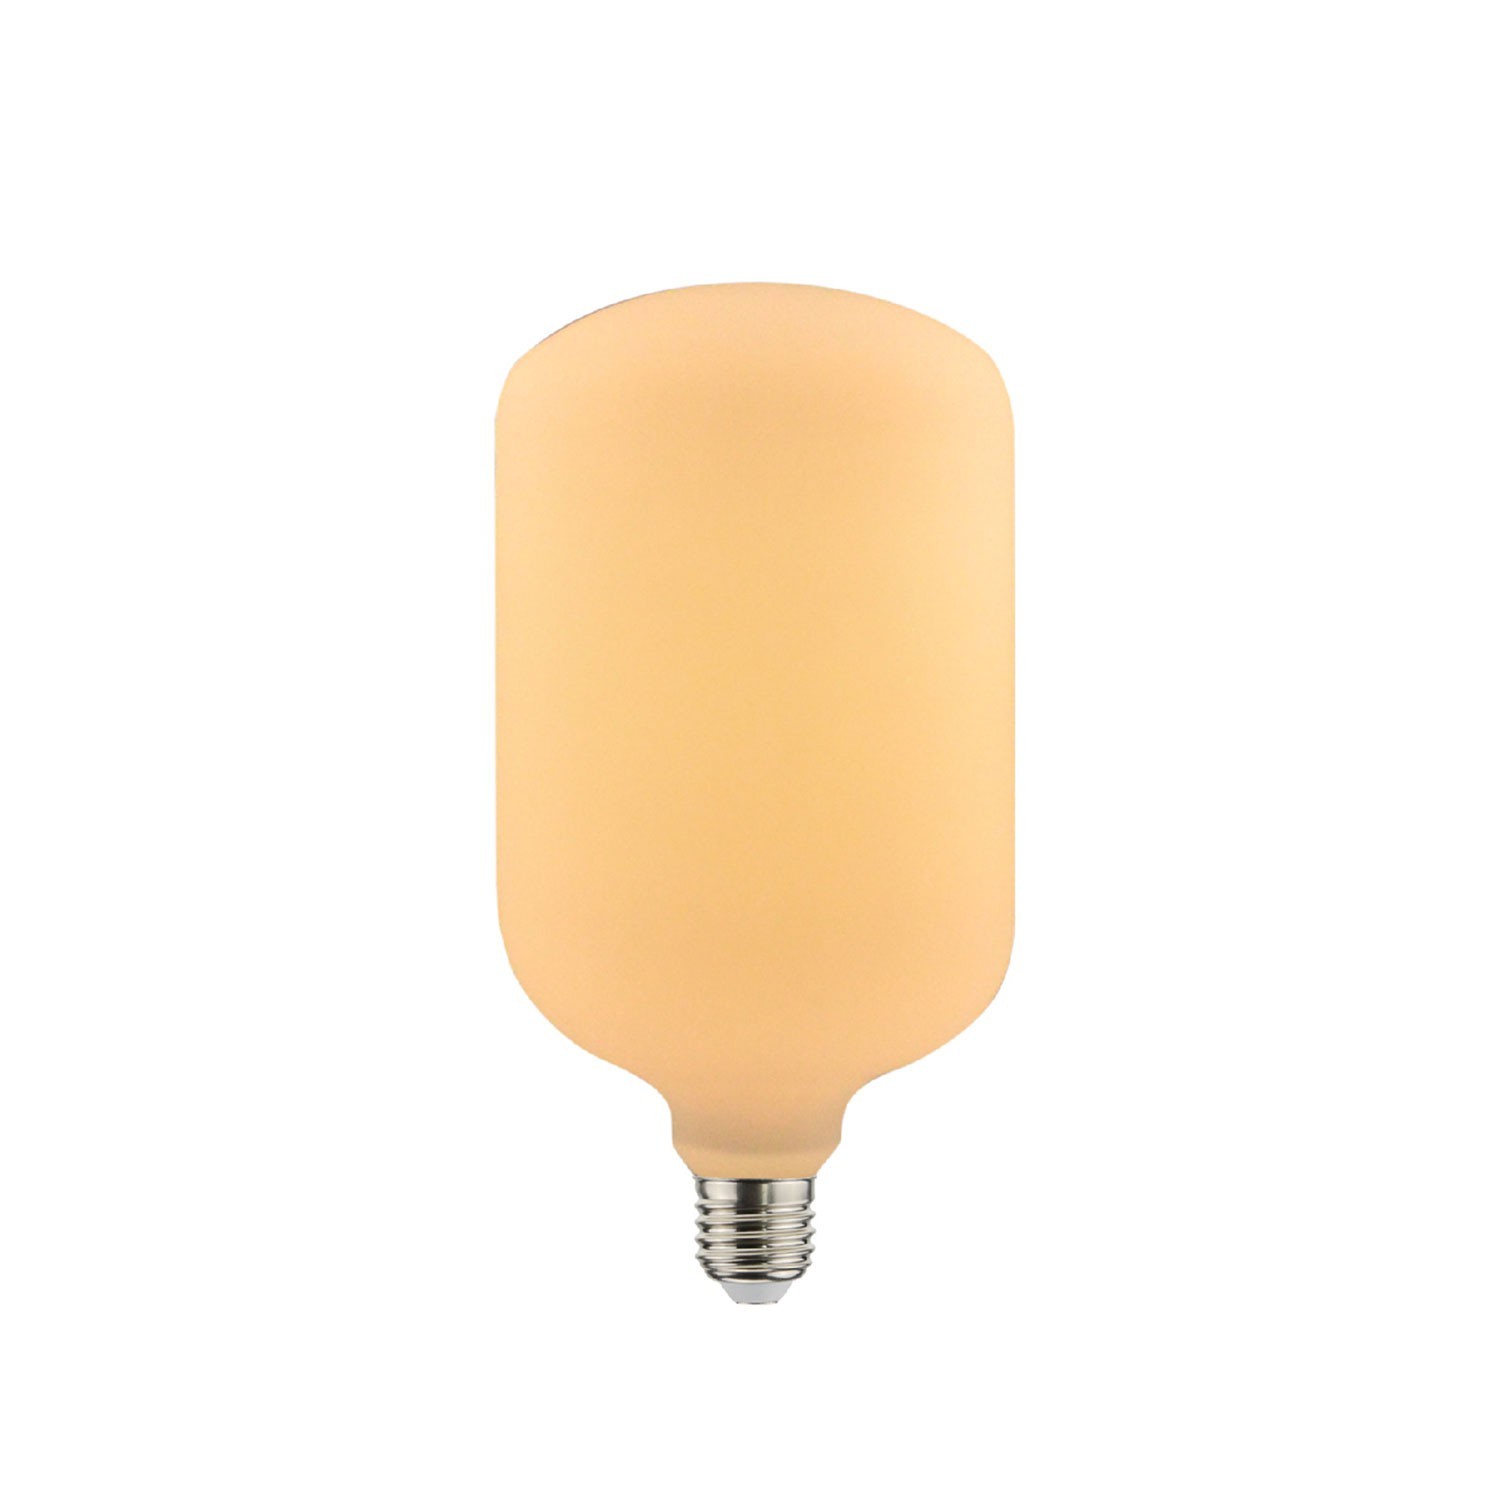 LED Porcelain Light Bulb Candy 13W 1521Lm E27 2700K Dimmable